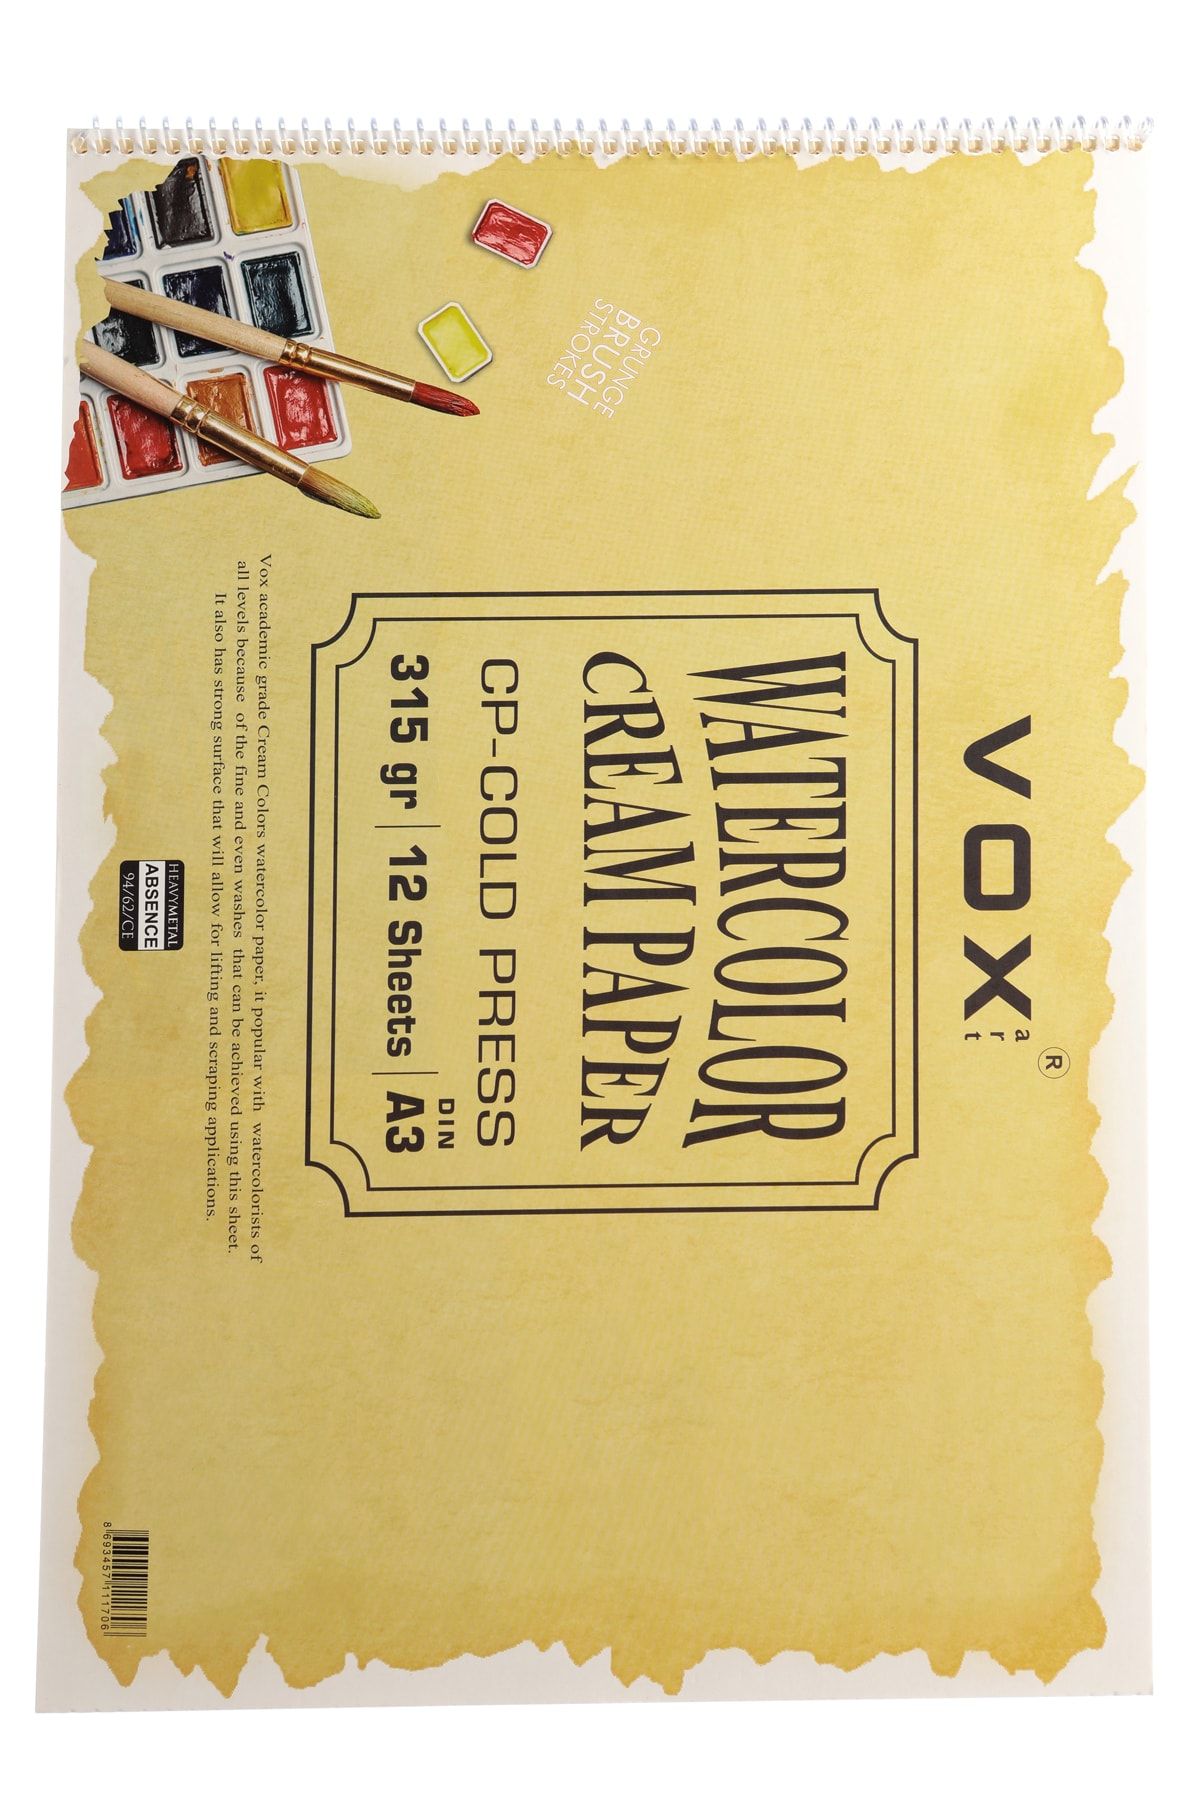 Vox Art 315 gr Krem Suluboya Blok - Cold Press -a3 -12 Yaprak